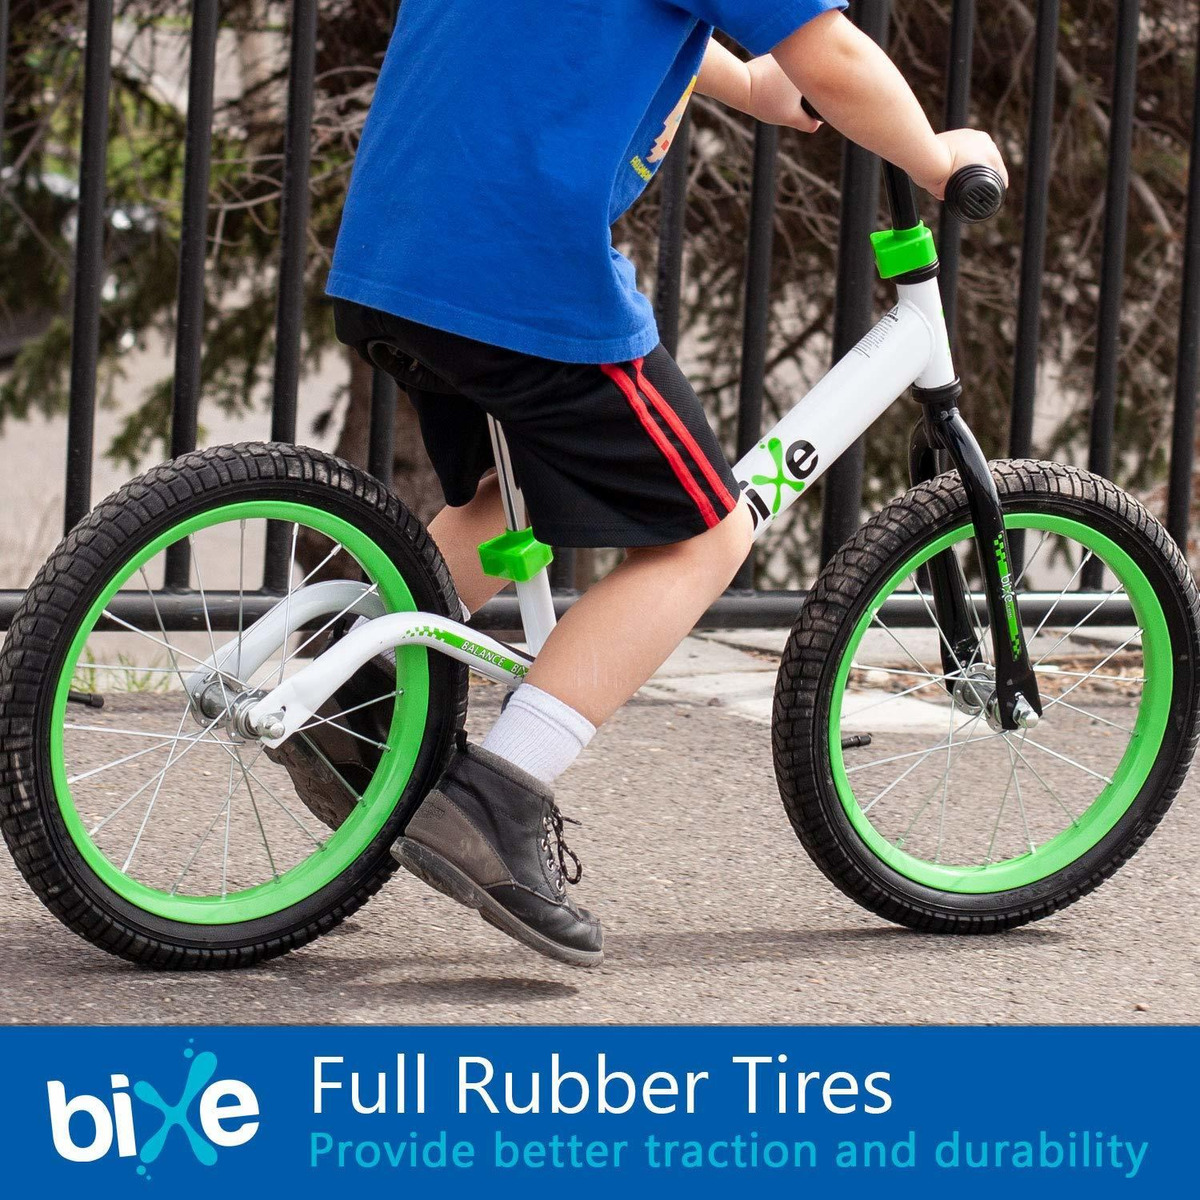 8 and 9 Years Old Balance Bike for Big Kids 5 Fox Air Beds 7 6 Bixe 16 Balance Bike for for Big Kids 5